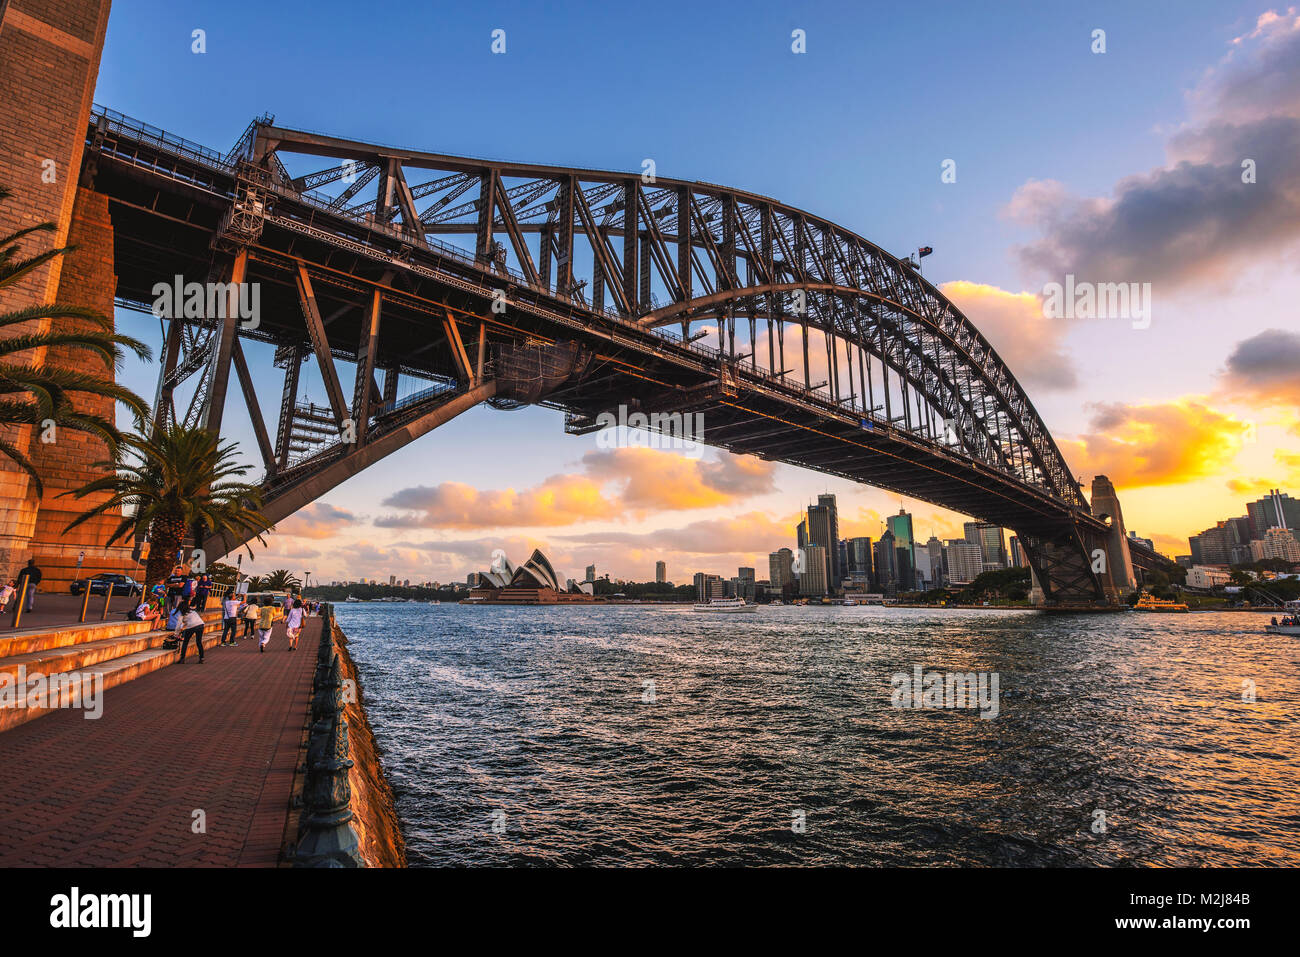 People walk under the Harbour Bridge with view of Sydney skyline Stock Photo